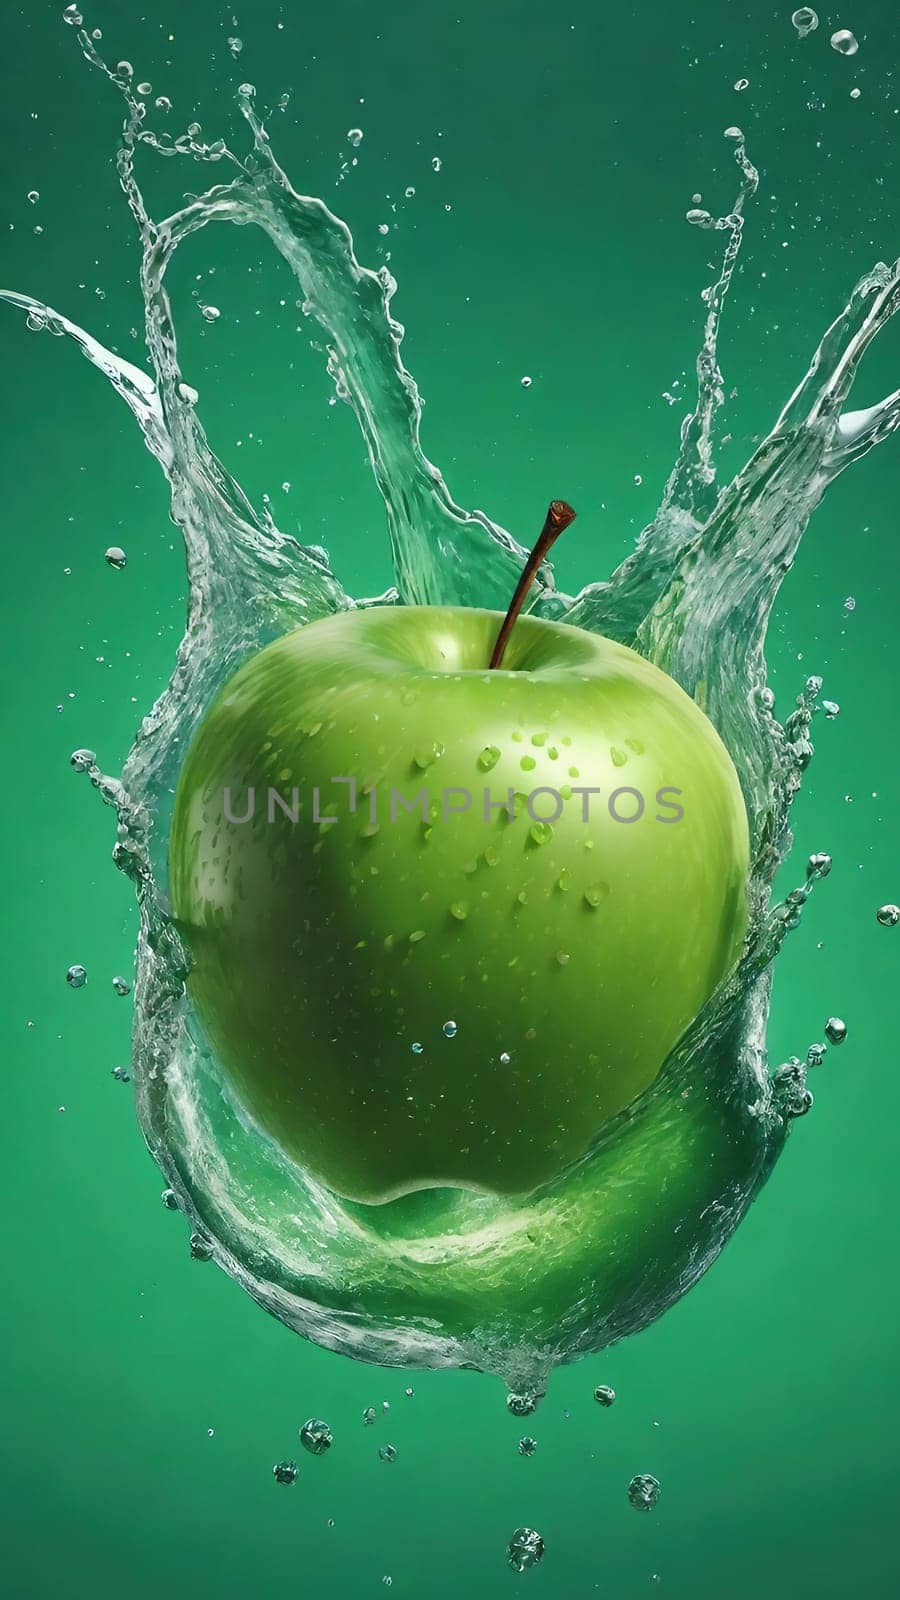 Apple falling into water with splash, isolated on background. by yilmazsavaskandag